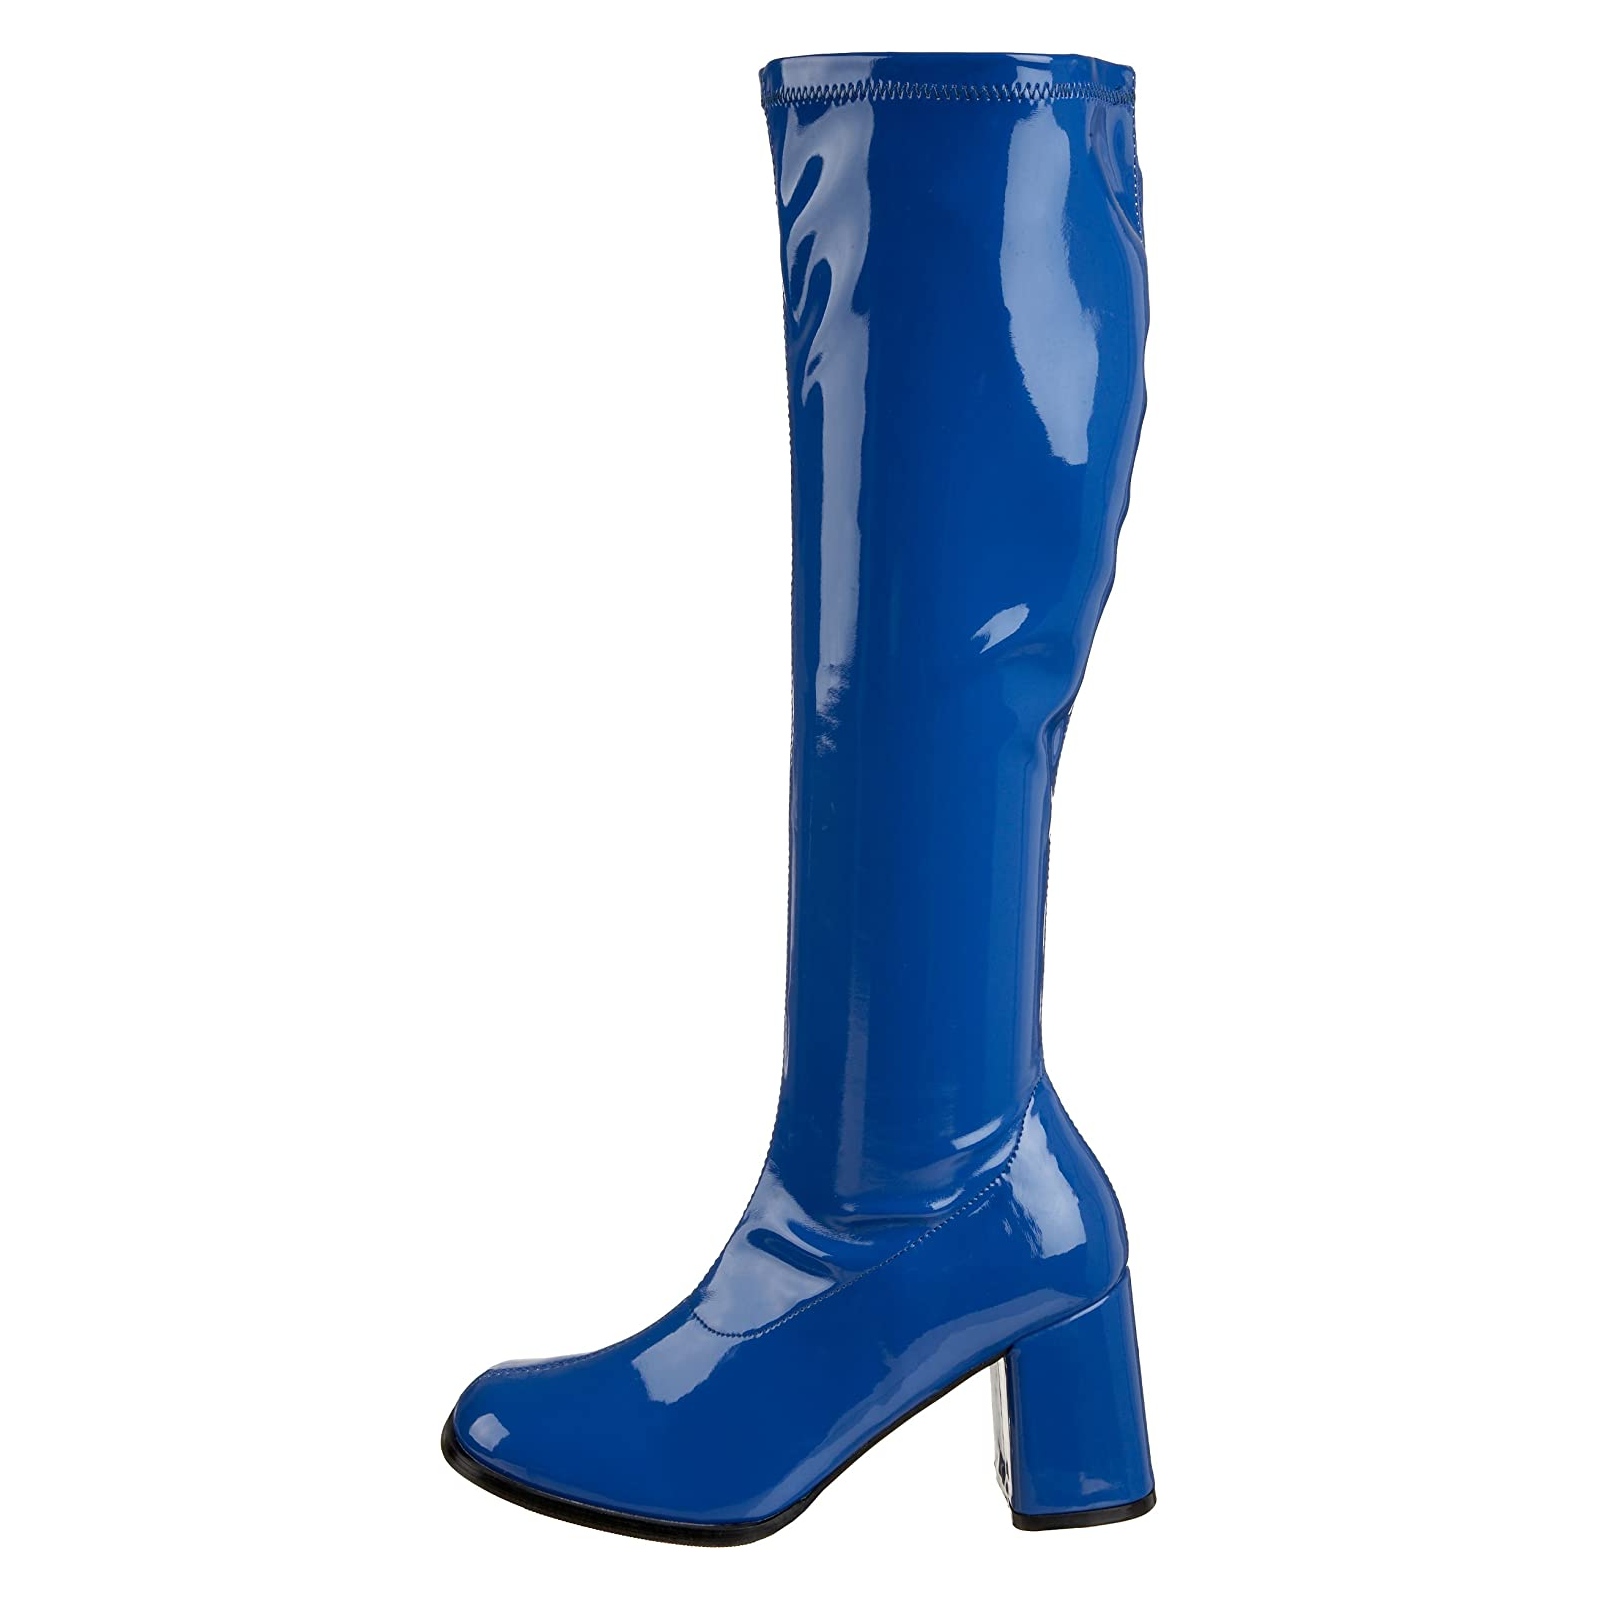 Blå 7,5 cm GOGO-300 hæle damestøvler til